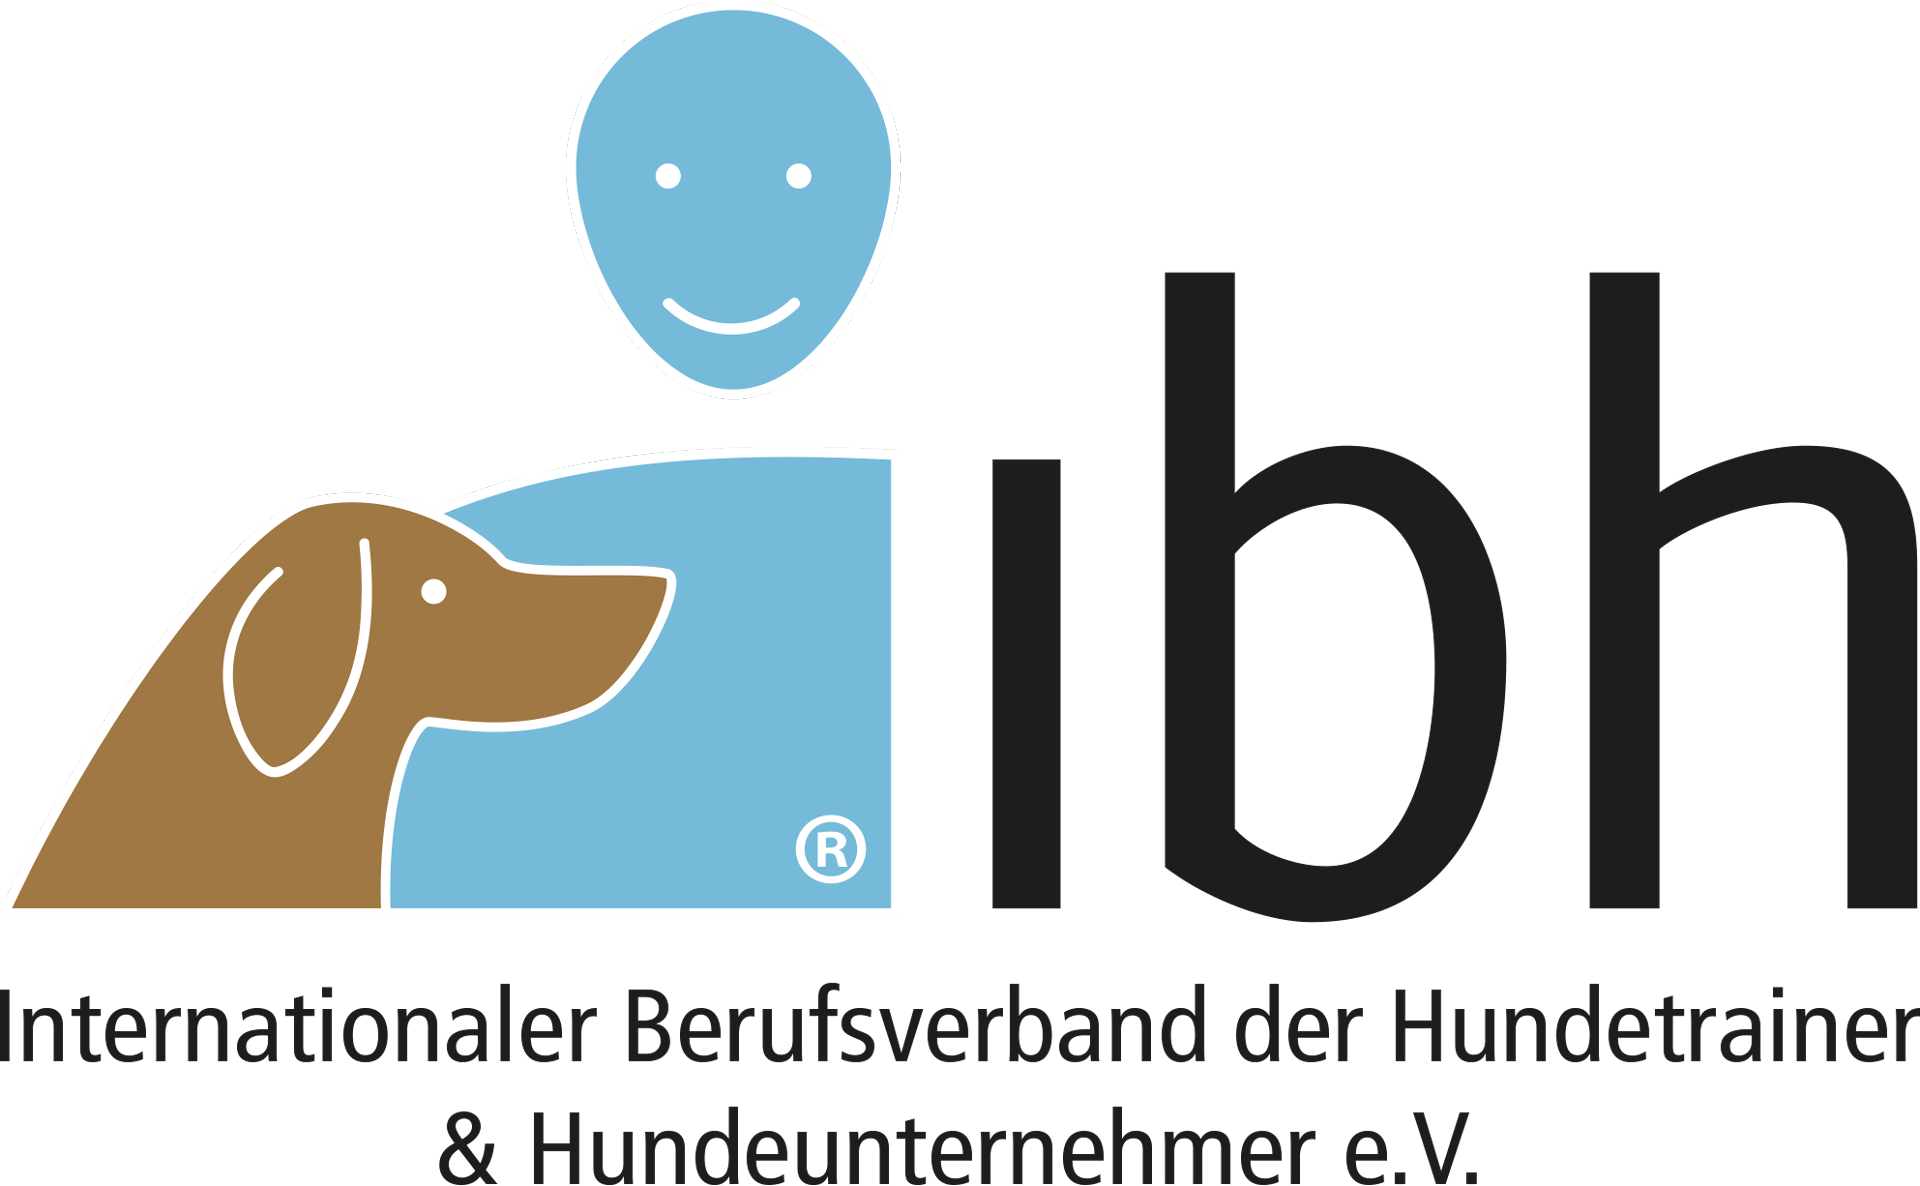 Internationaler Berufsverband der Hundetrainer & Hundeunternehmer e. V.